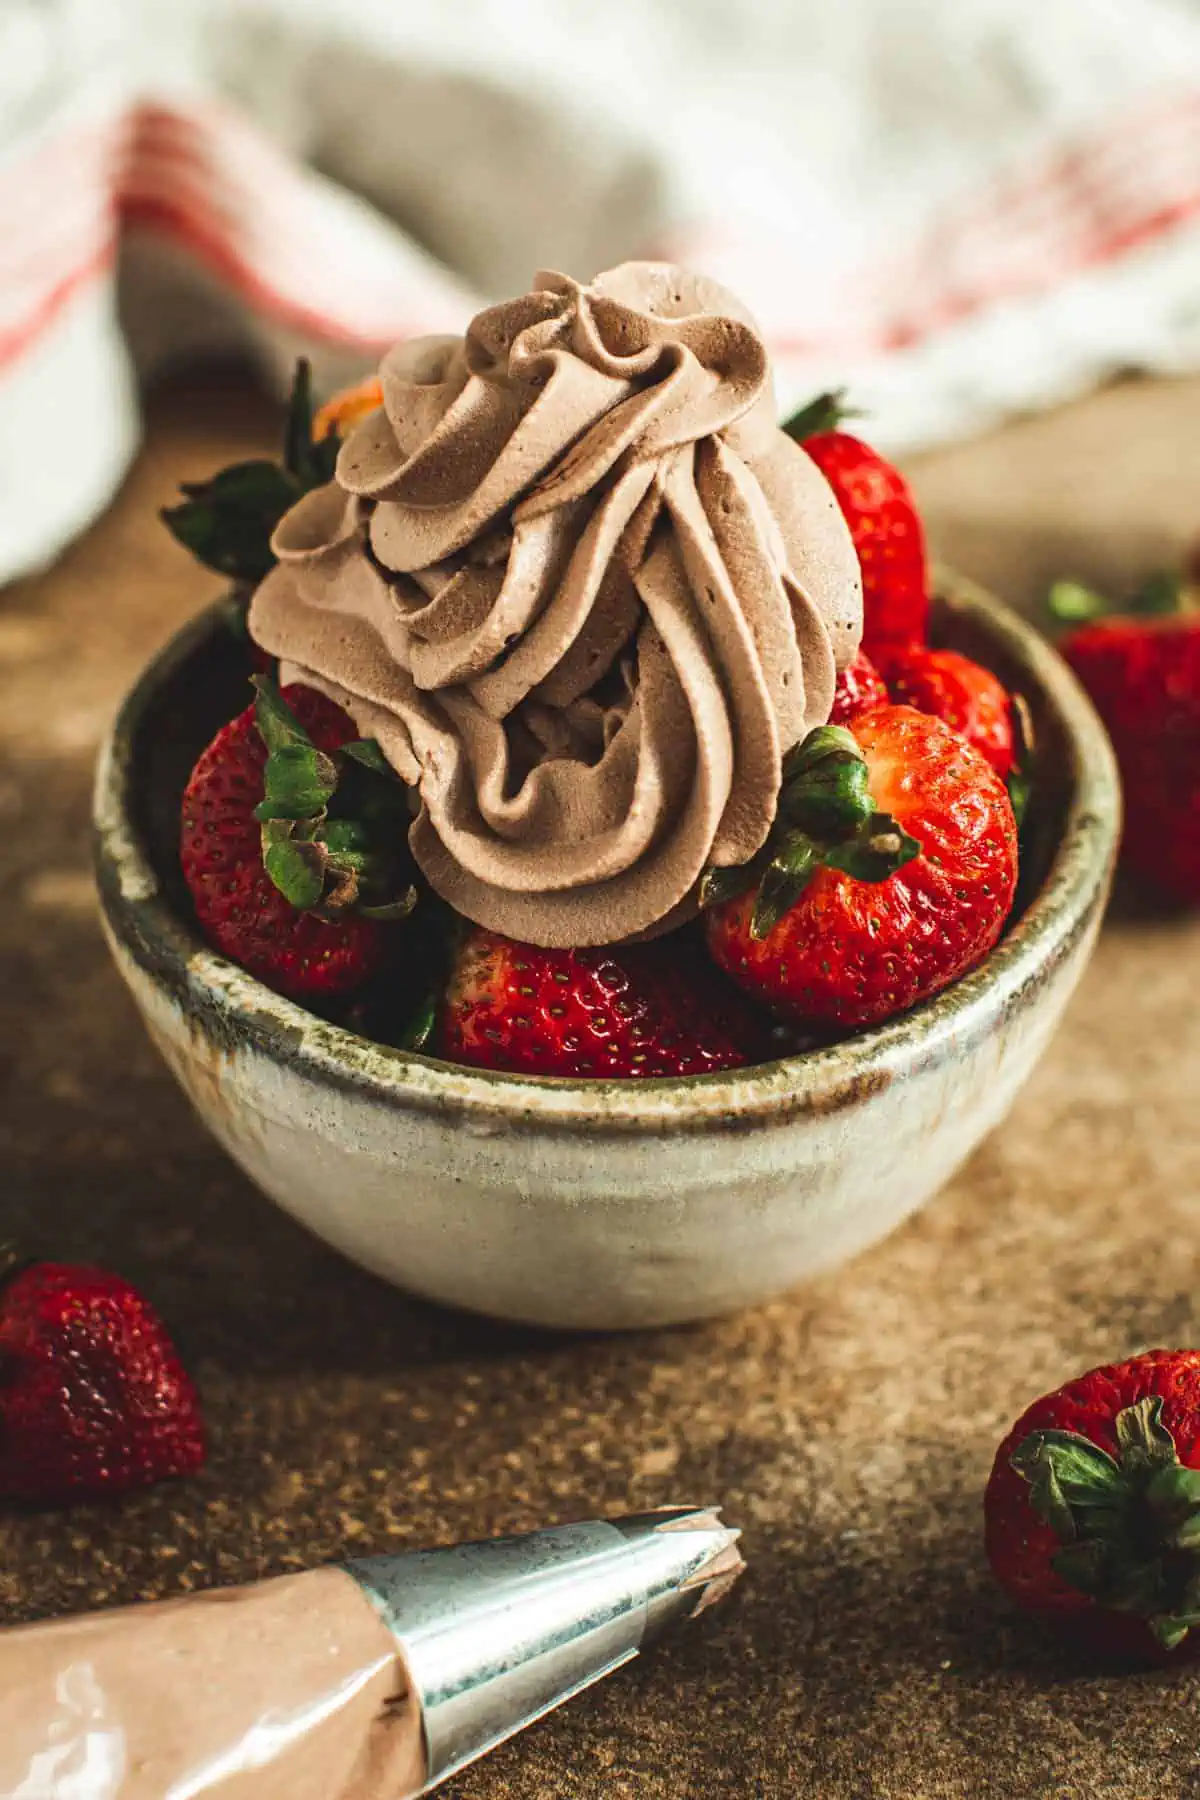 Chocolate whipped cream over strawberries.